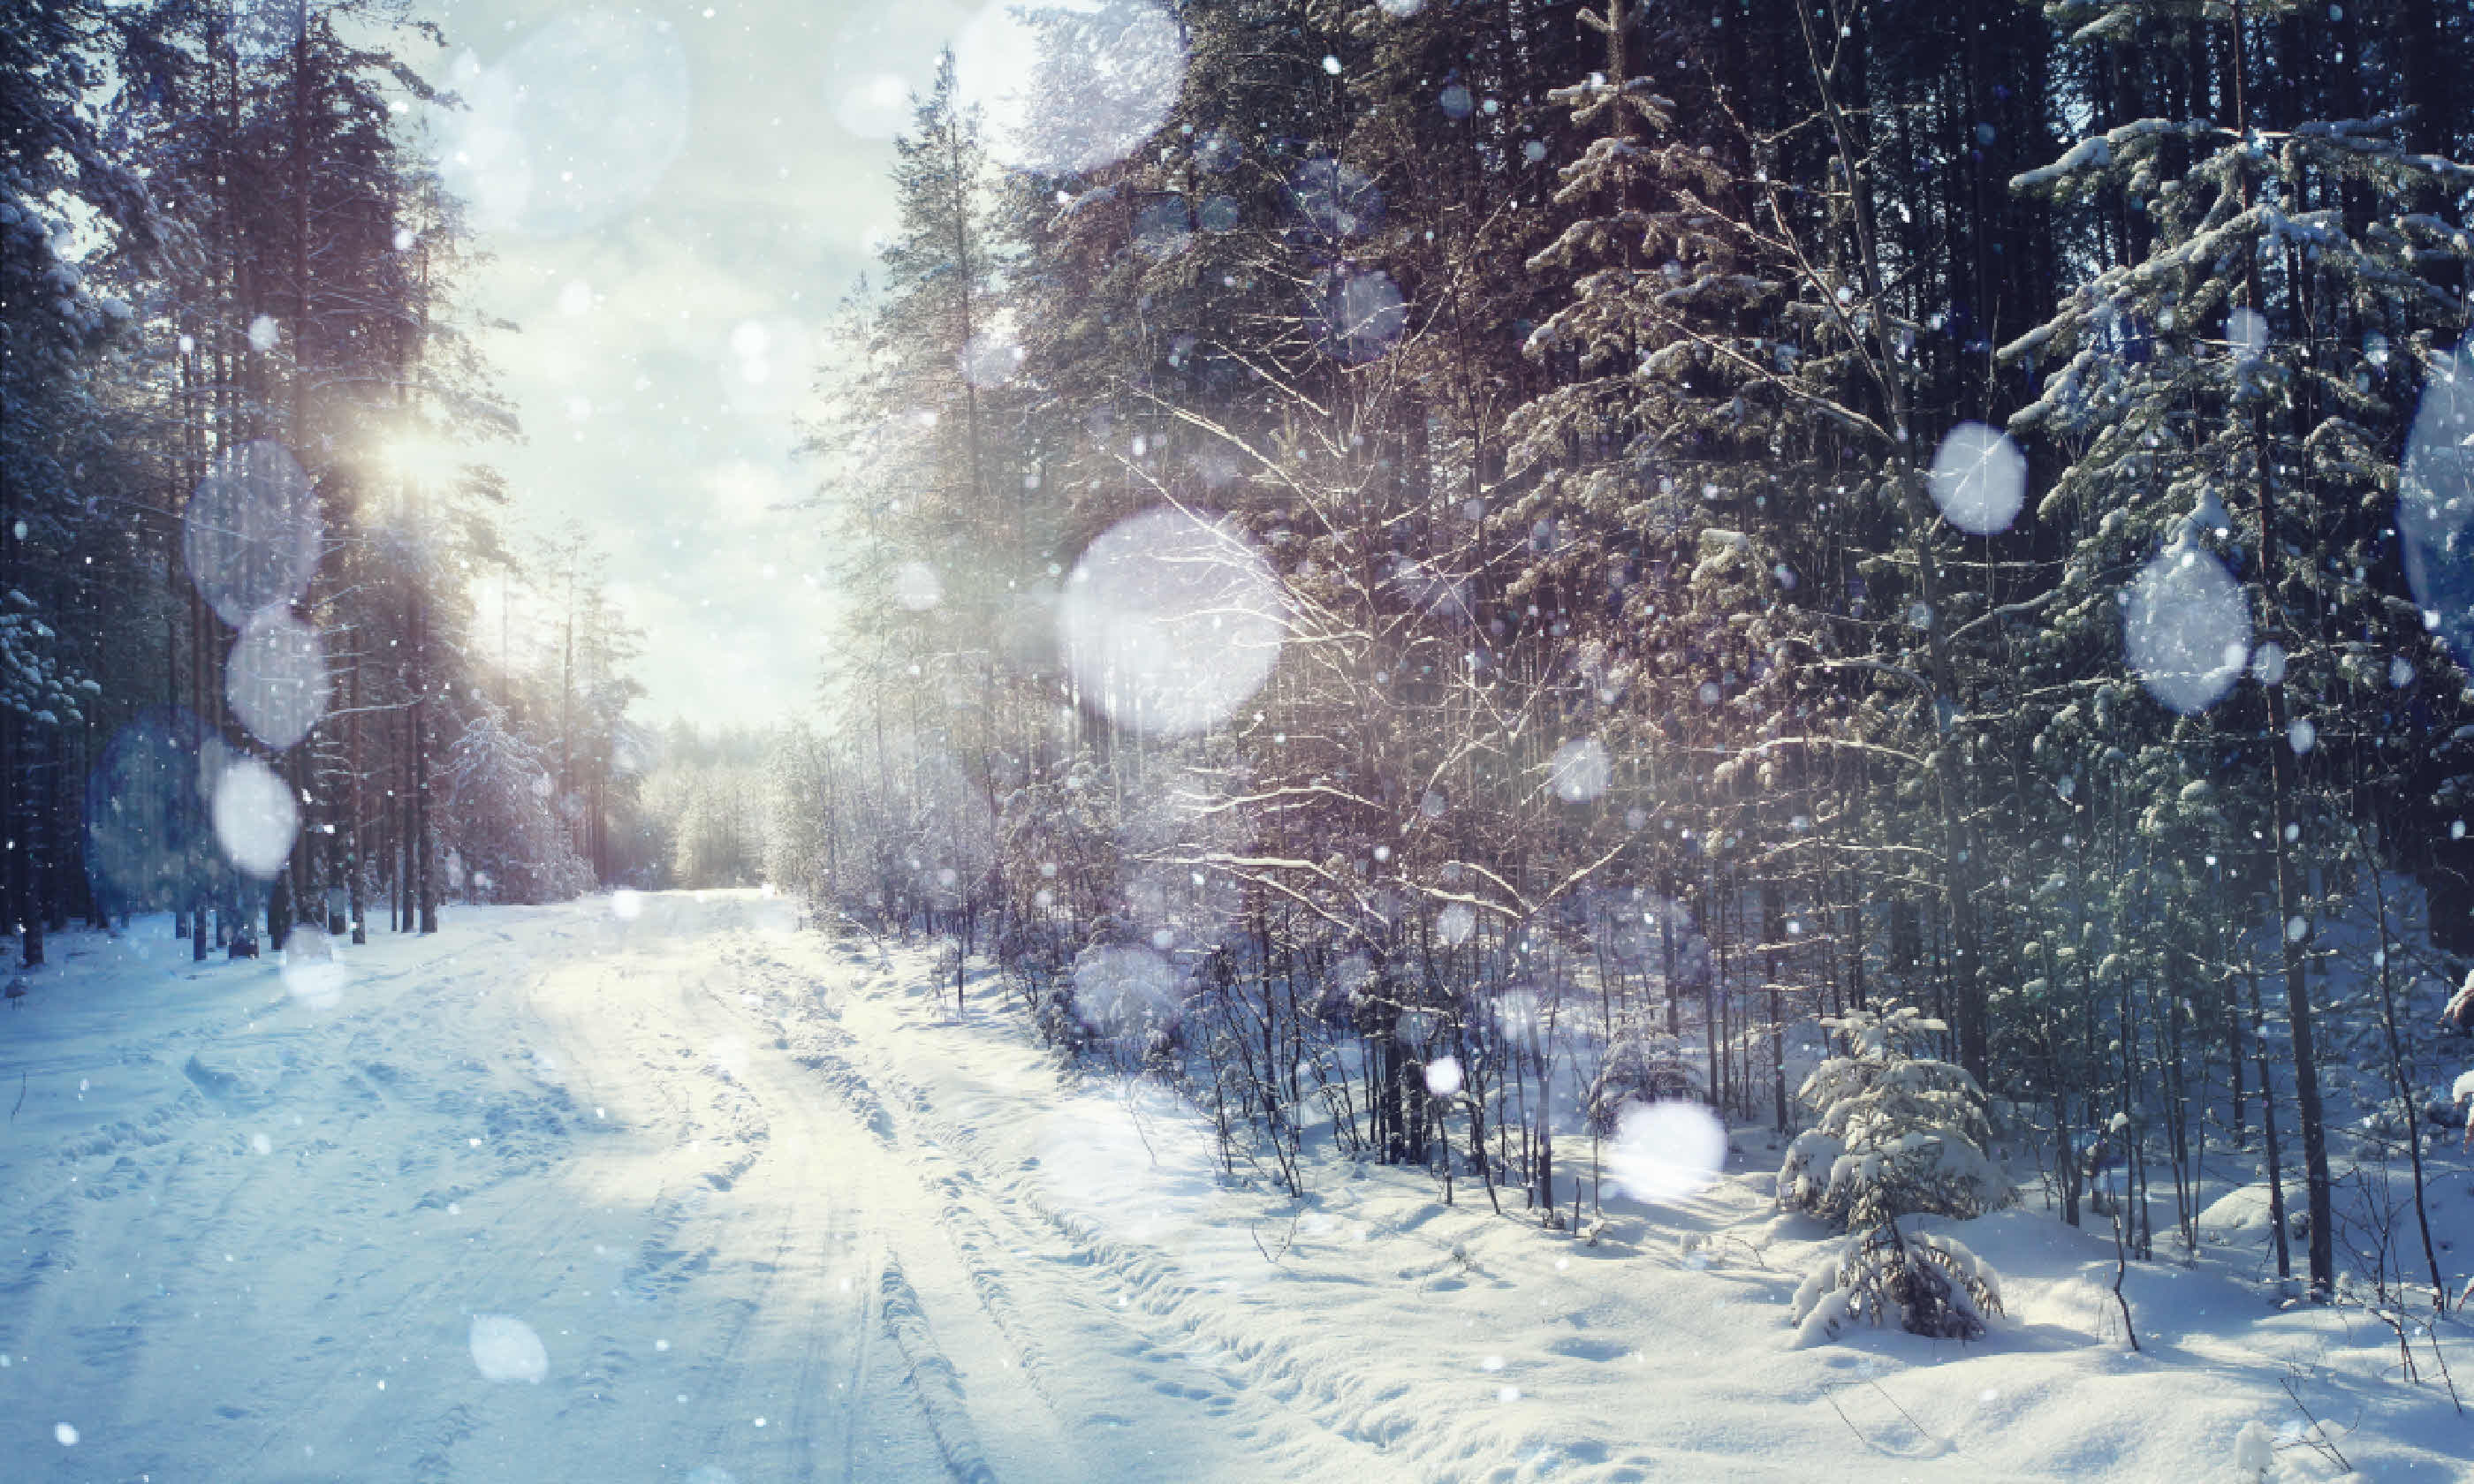 Winter forest (Shutterstock)